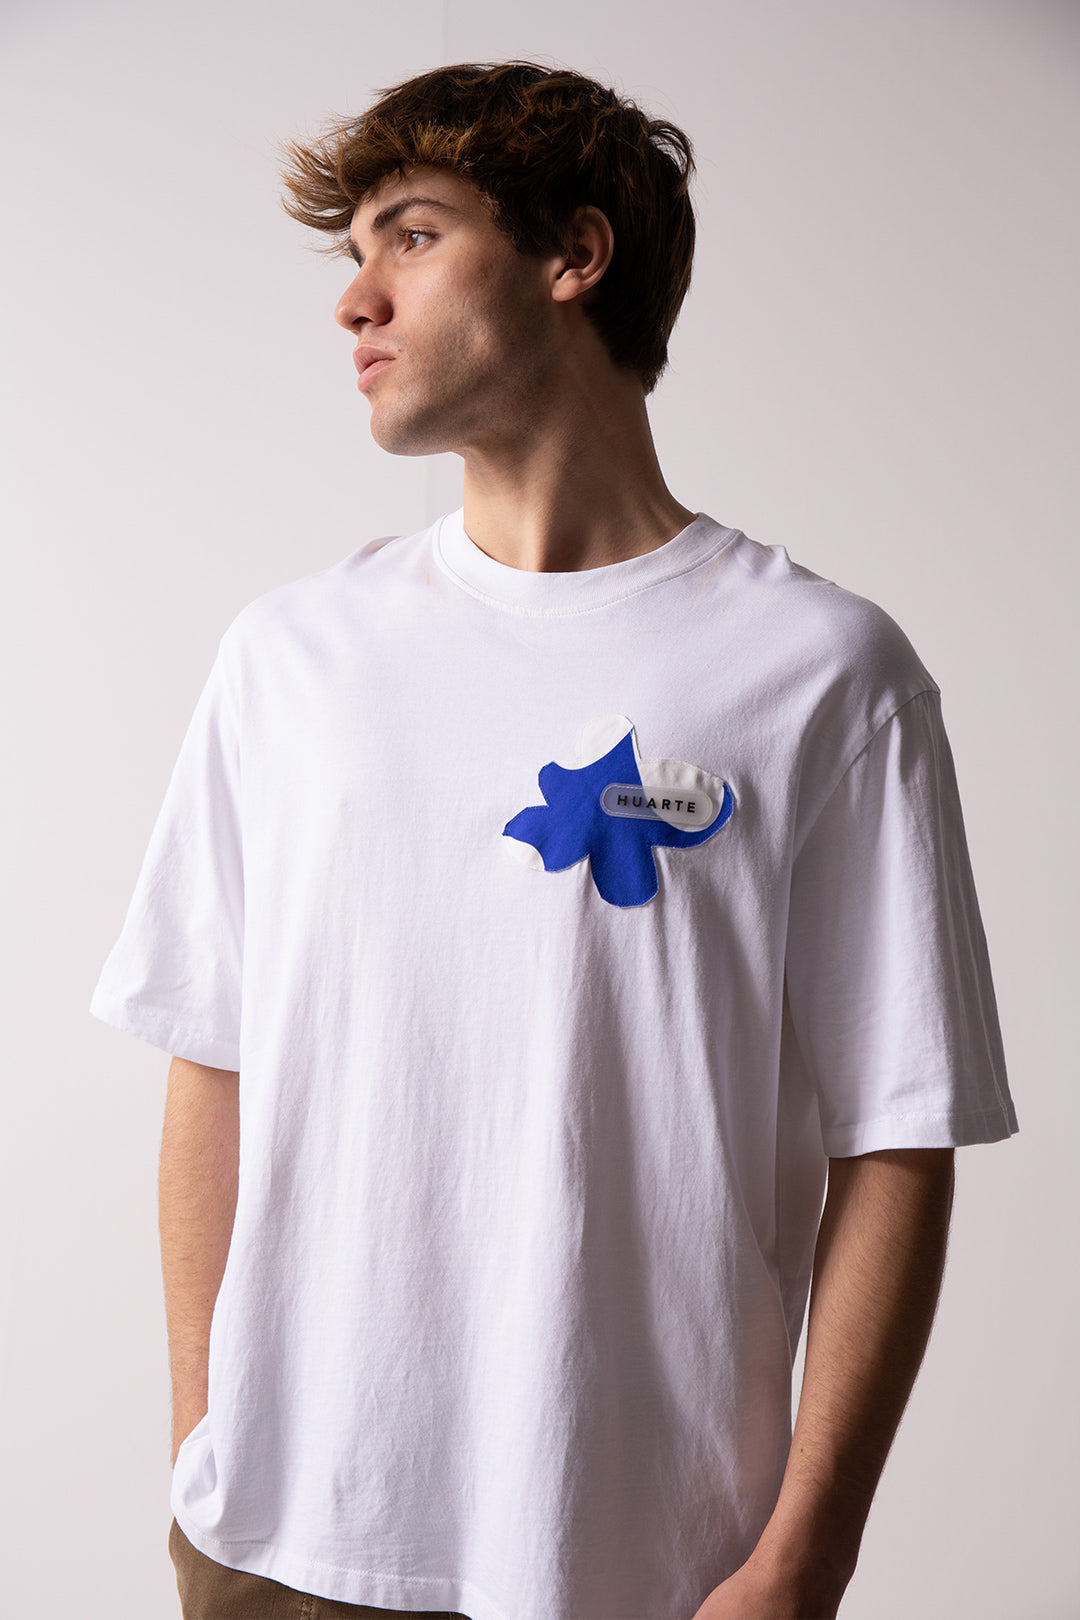 Cap Negret logo t-shirt